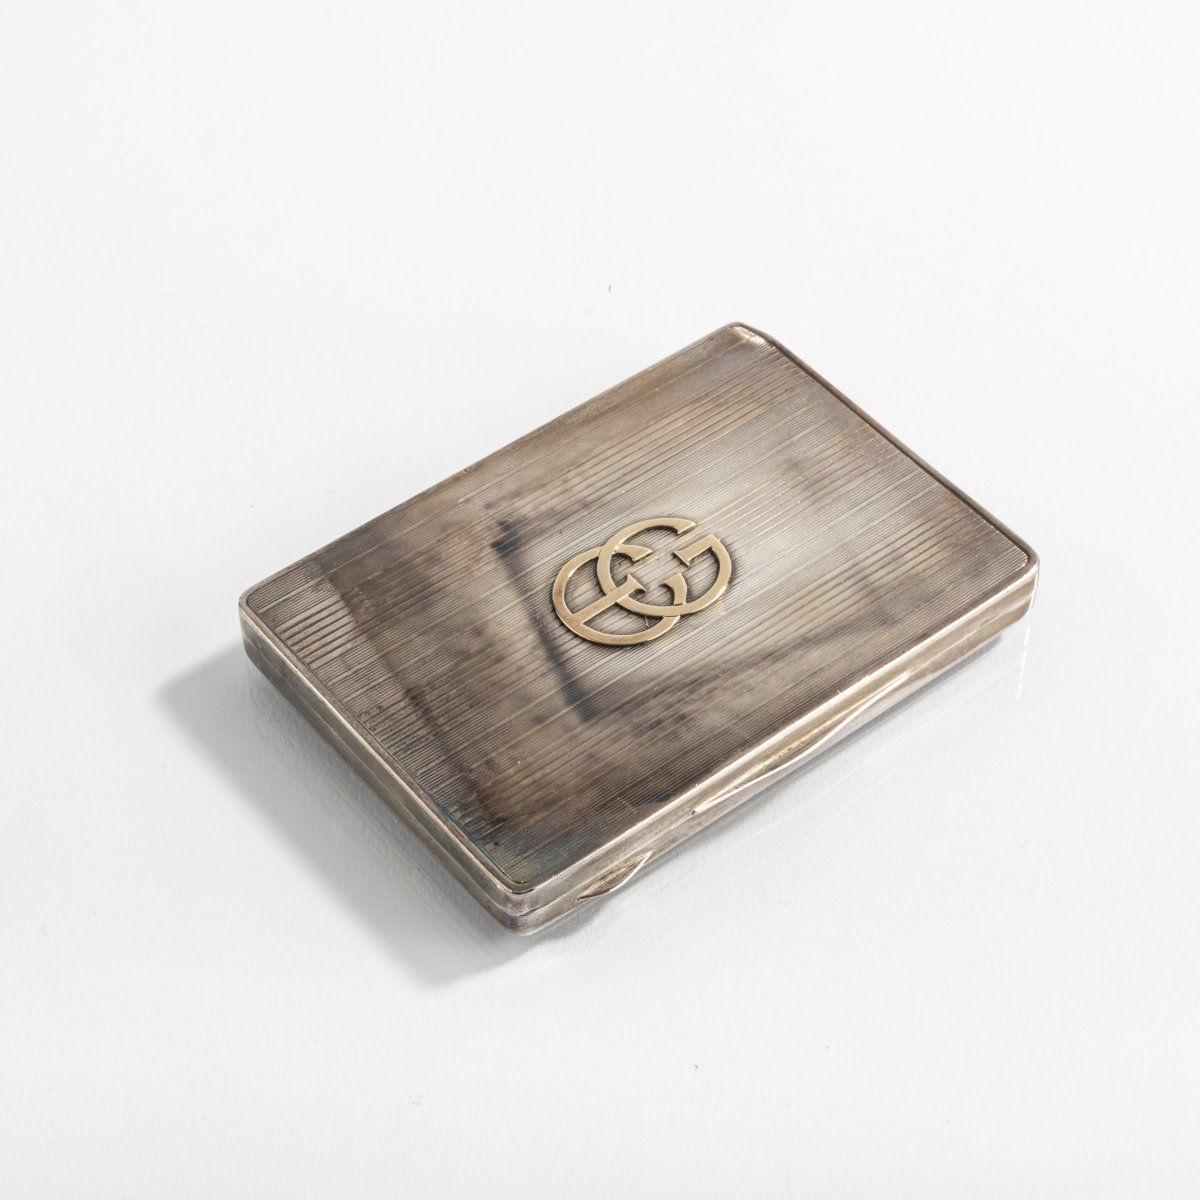 Null 法国，香烟盒，20世纪20年代，银制，镀金。88克。60 x 85 x 10 毫米。签名：检查标记（浮雕）。来自一个王公贵族的房子。